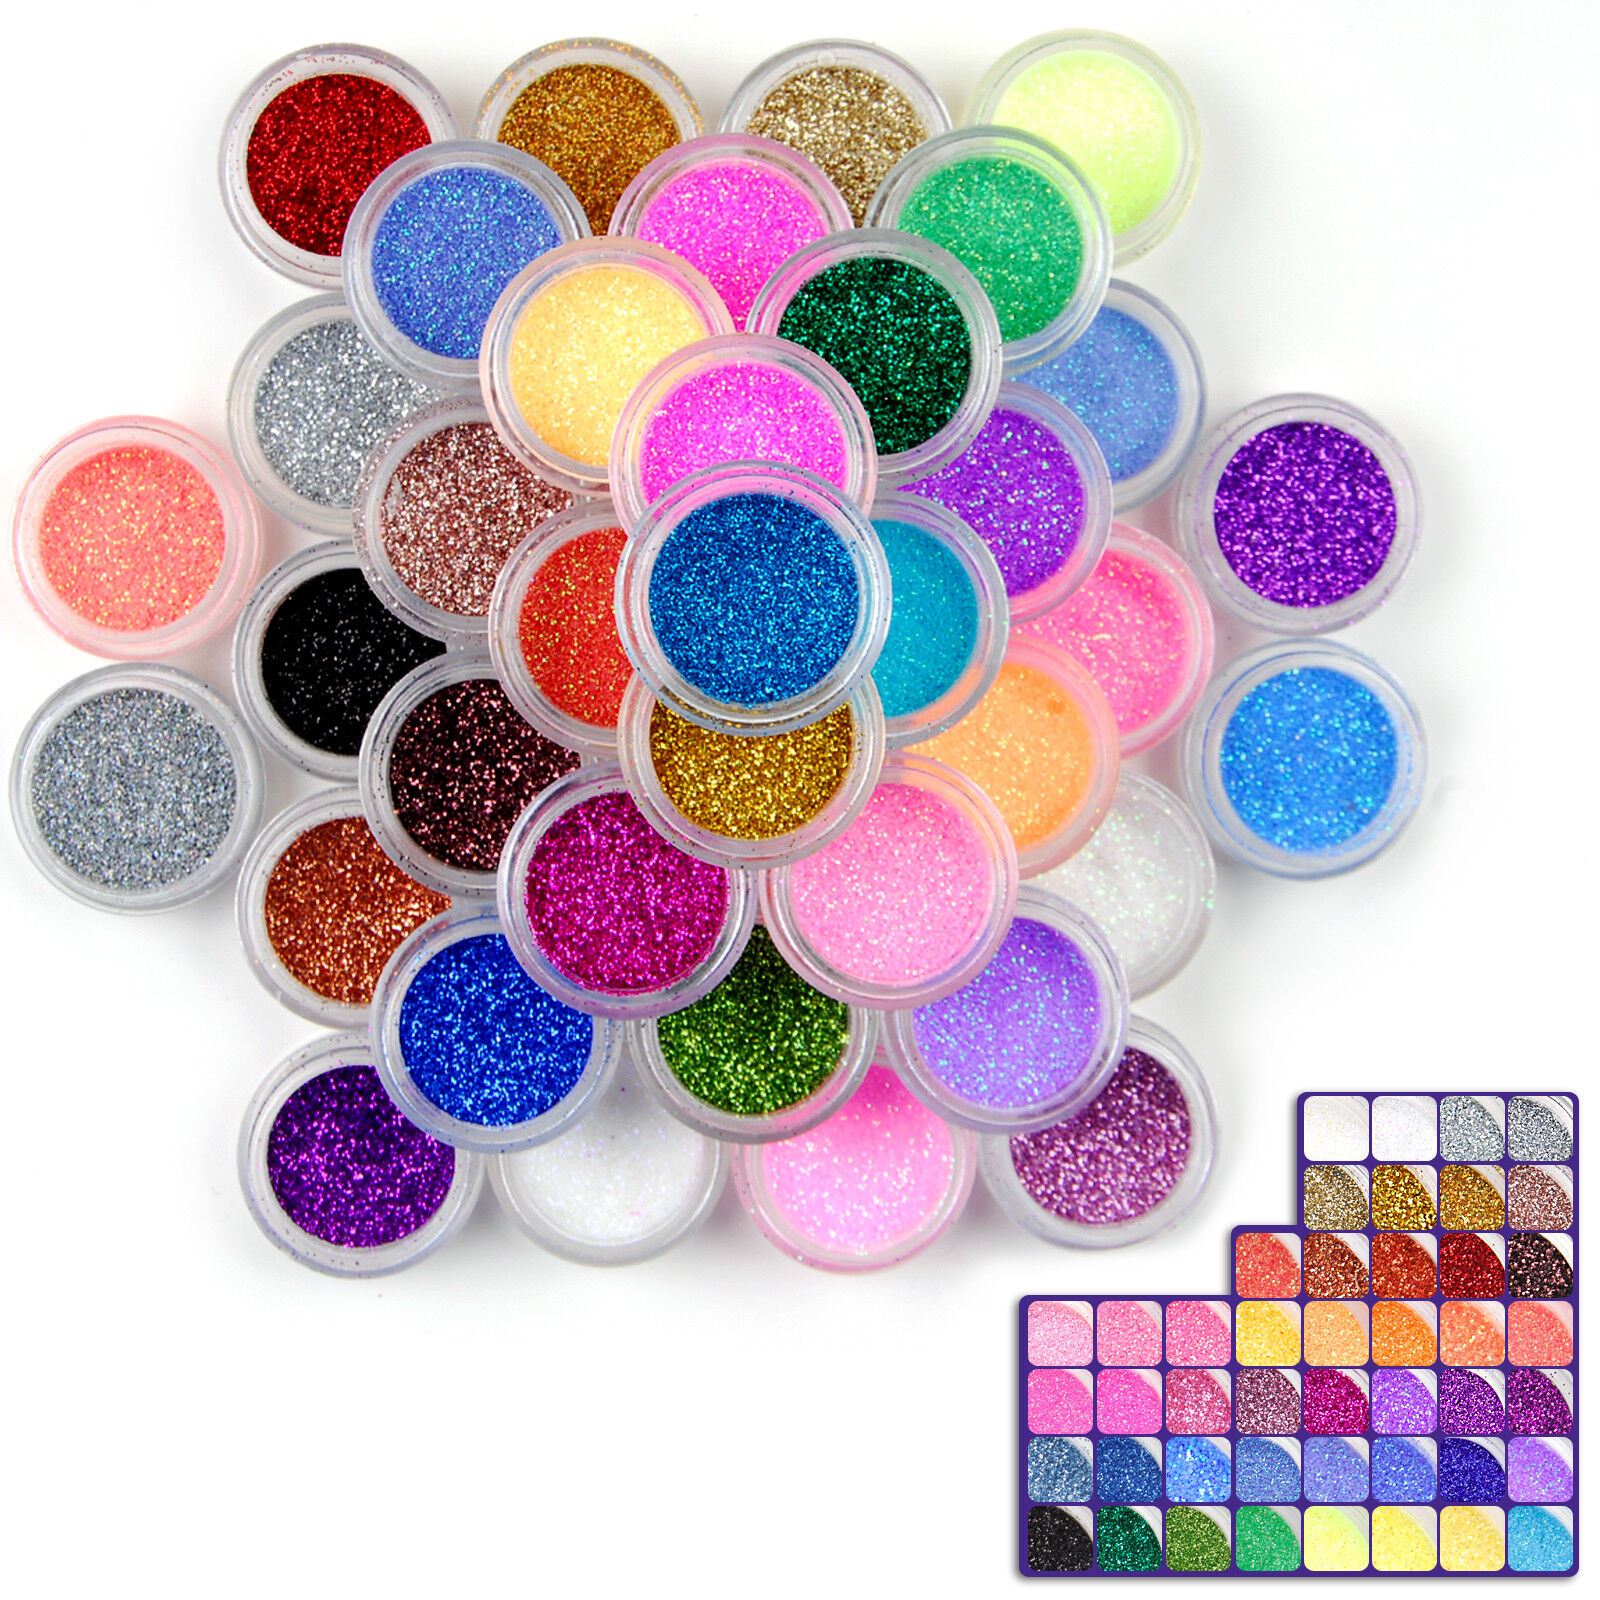 48 Colors Glitter Nail Art Dust Kit UV Acrylic Nail Sparkle Bright Powder Set Fraulein3°8 Does not apply